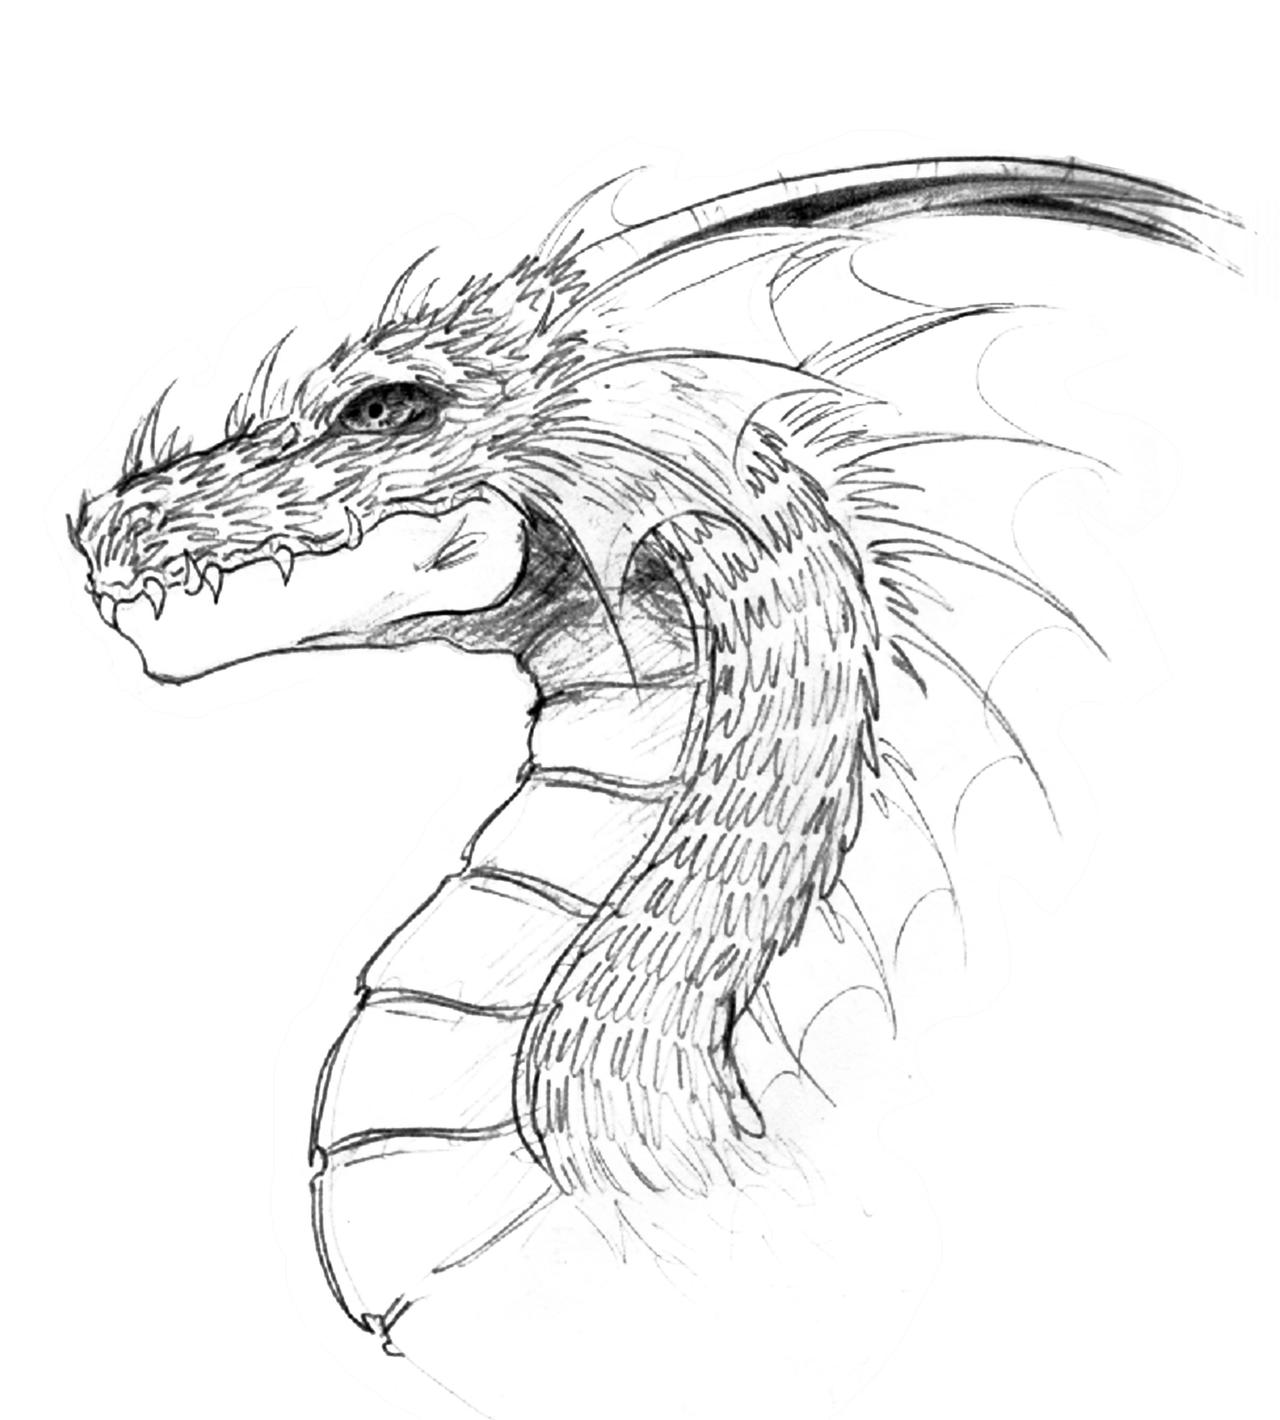 Dragon head by lastwarrior14 on DeviantArt